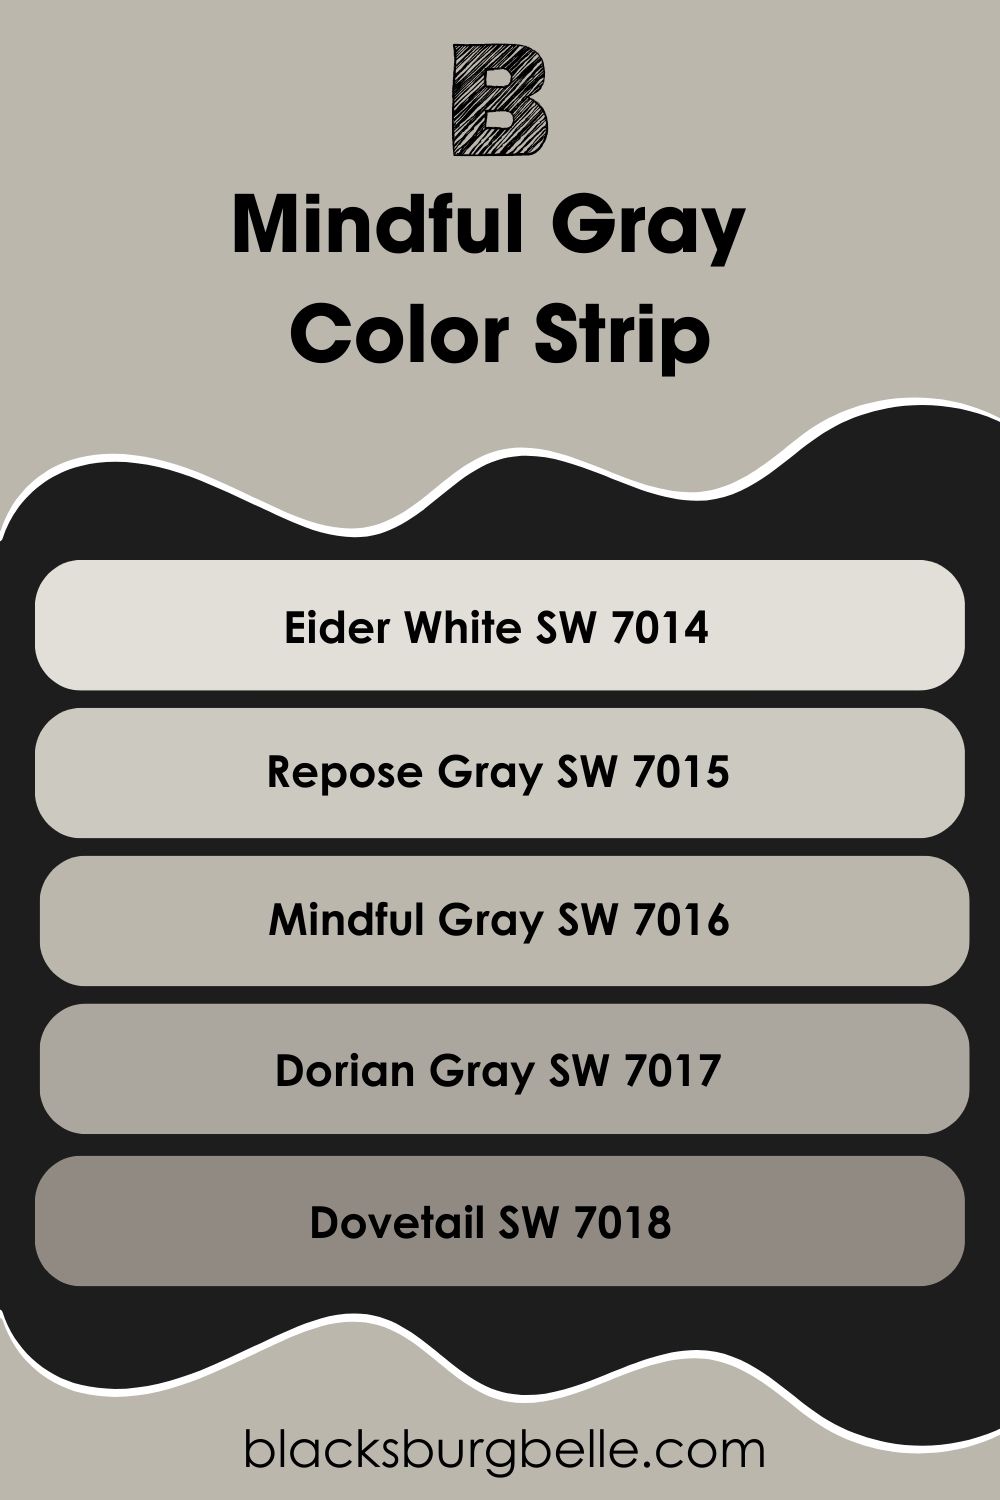 Mindful Gray Color Strip